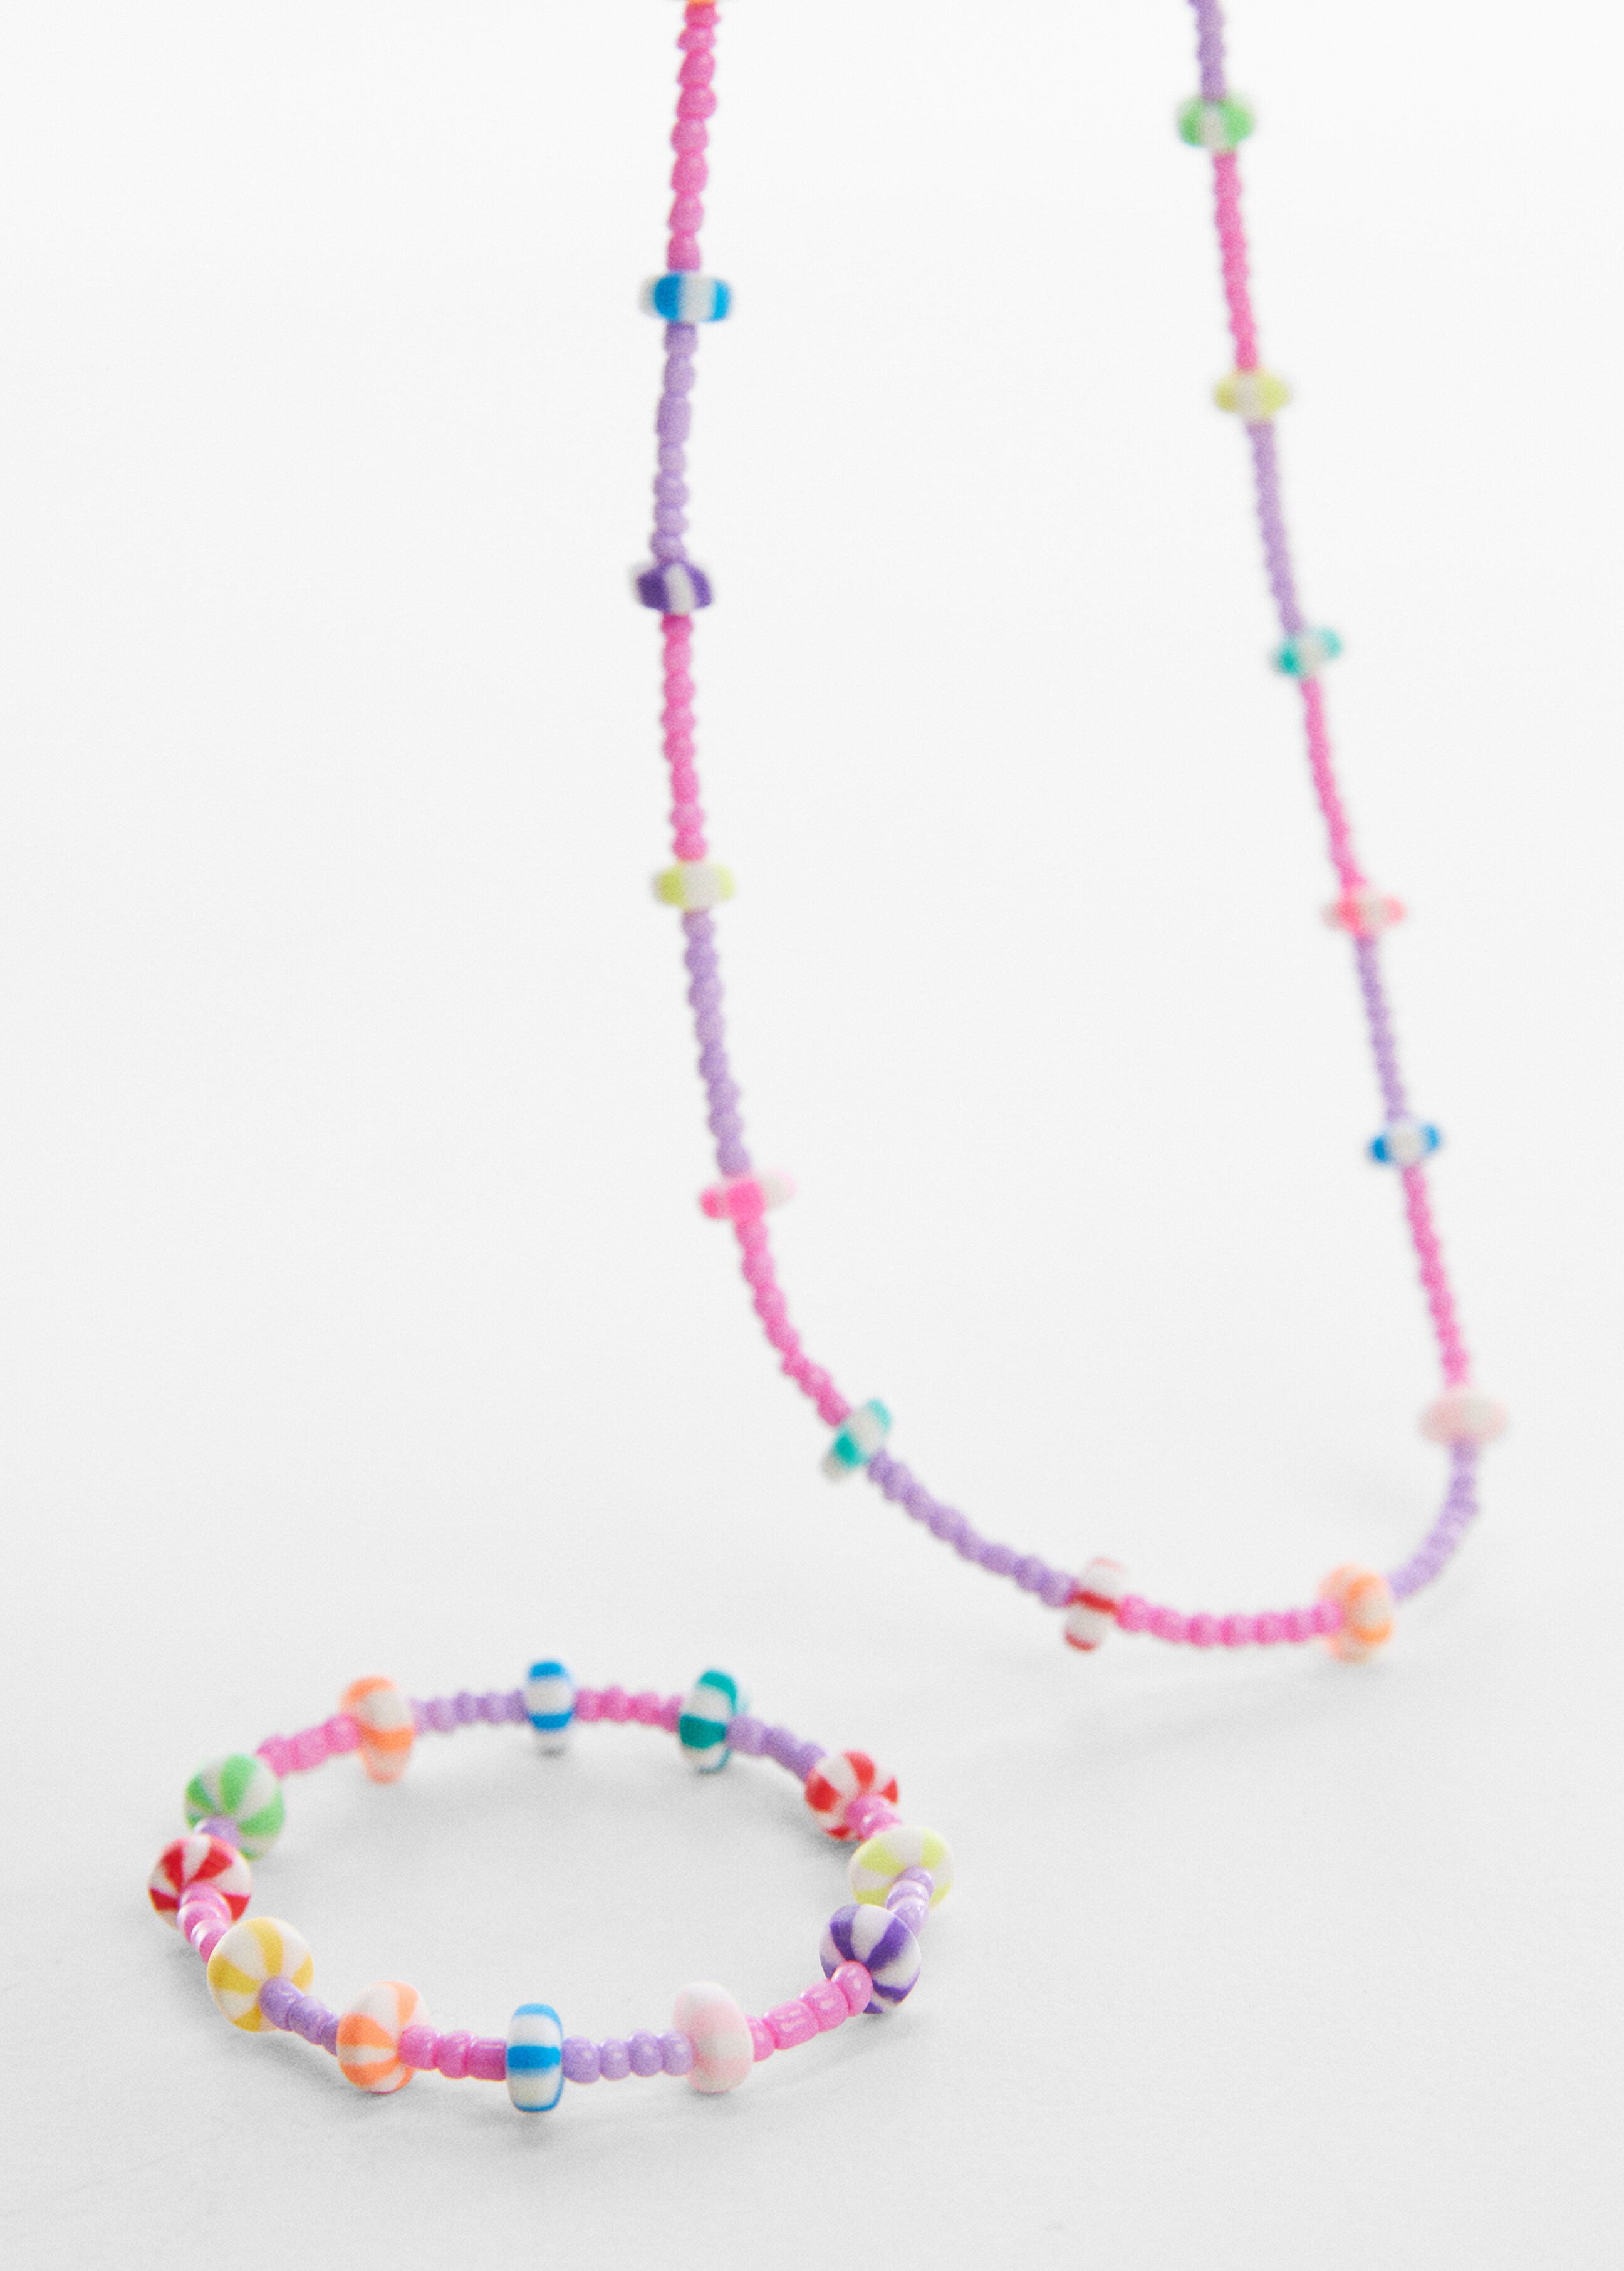 Mixed bead necklace - Medium plane